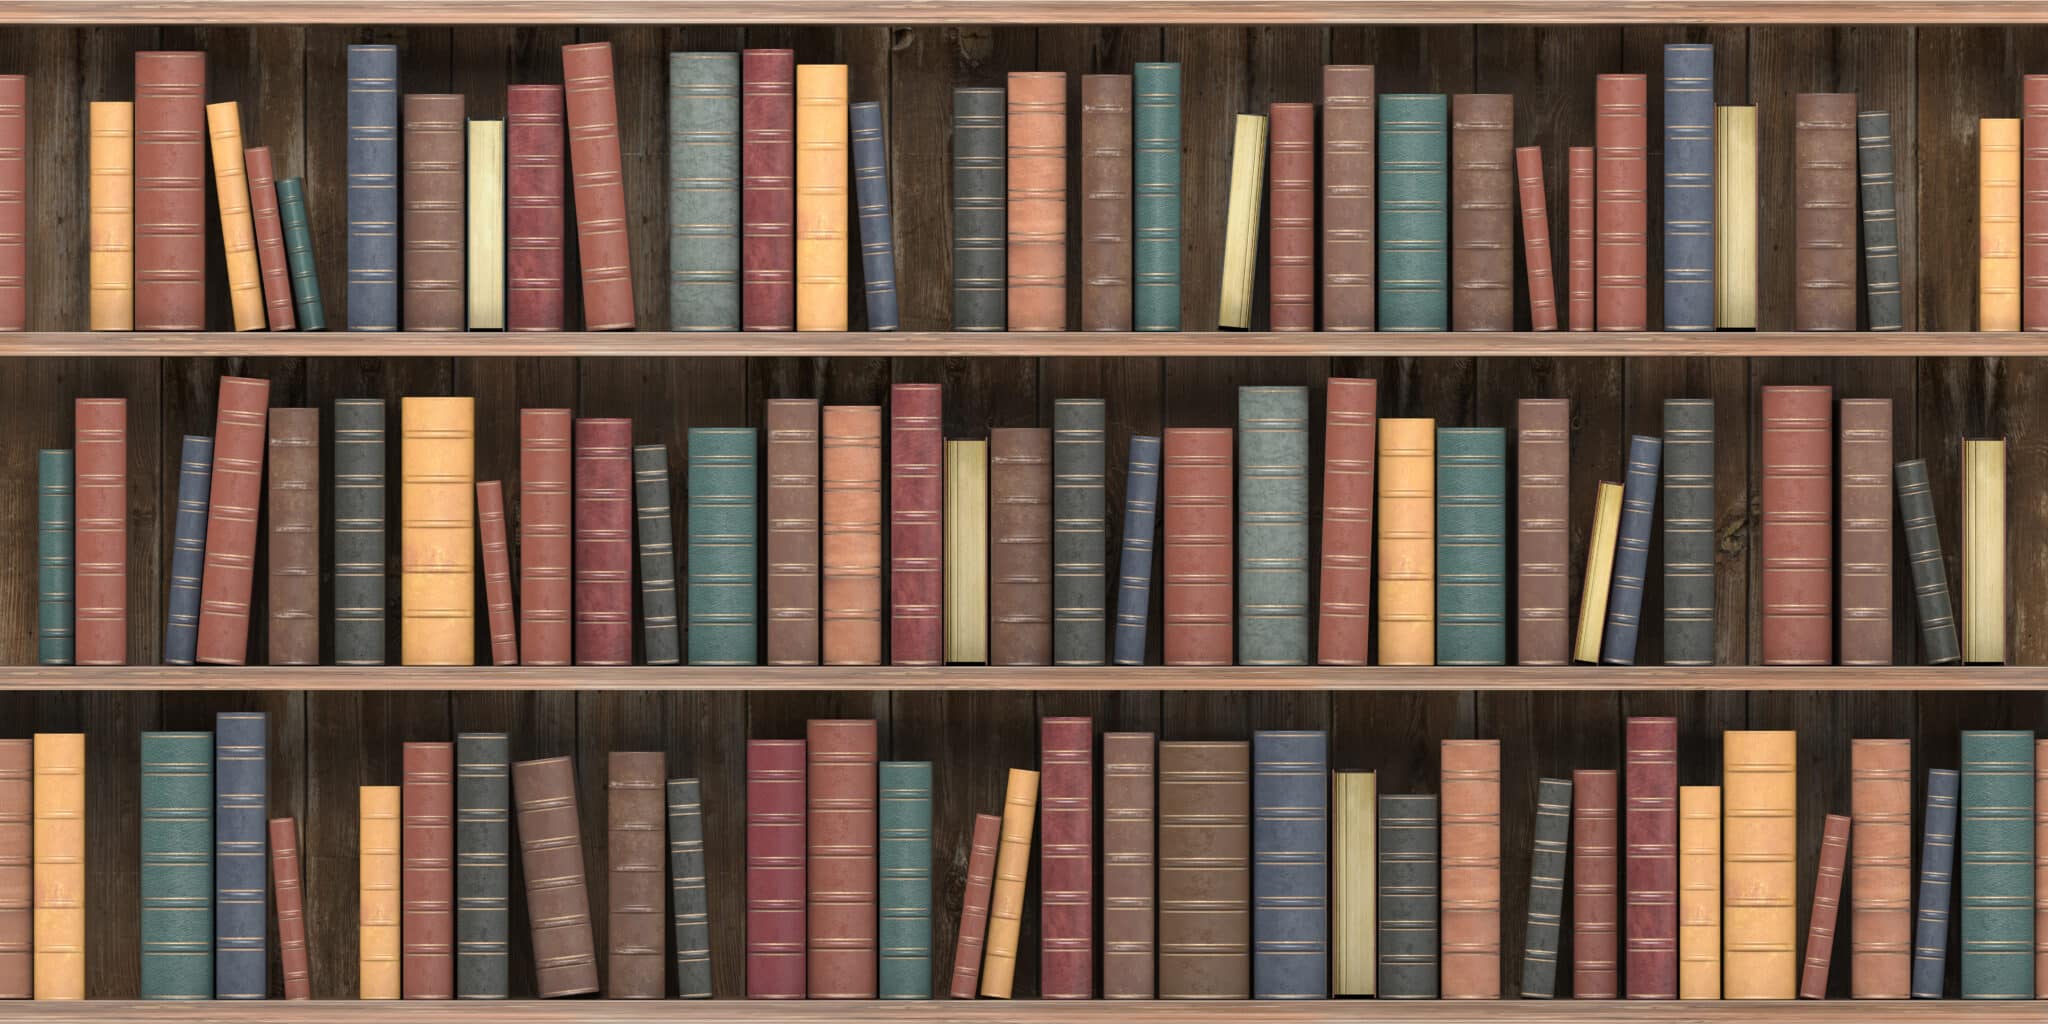 Vintage books on old wooden shelf. Old library or antique booksh